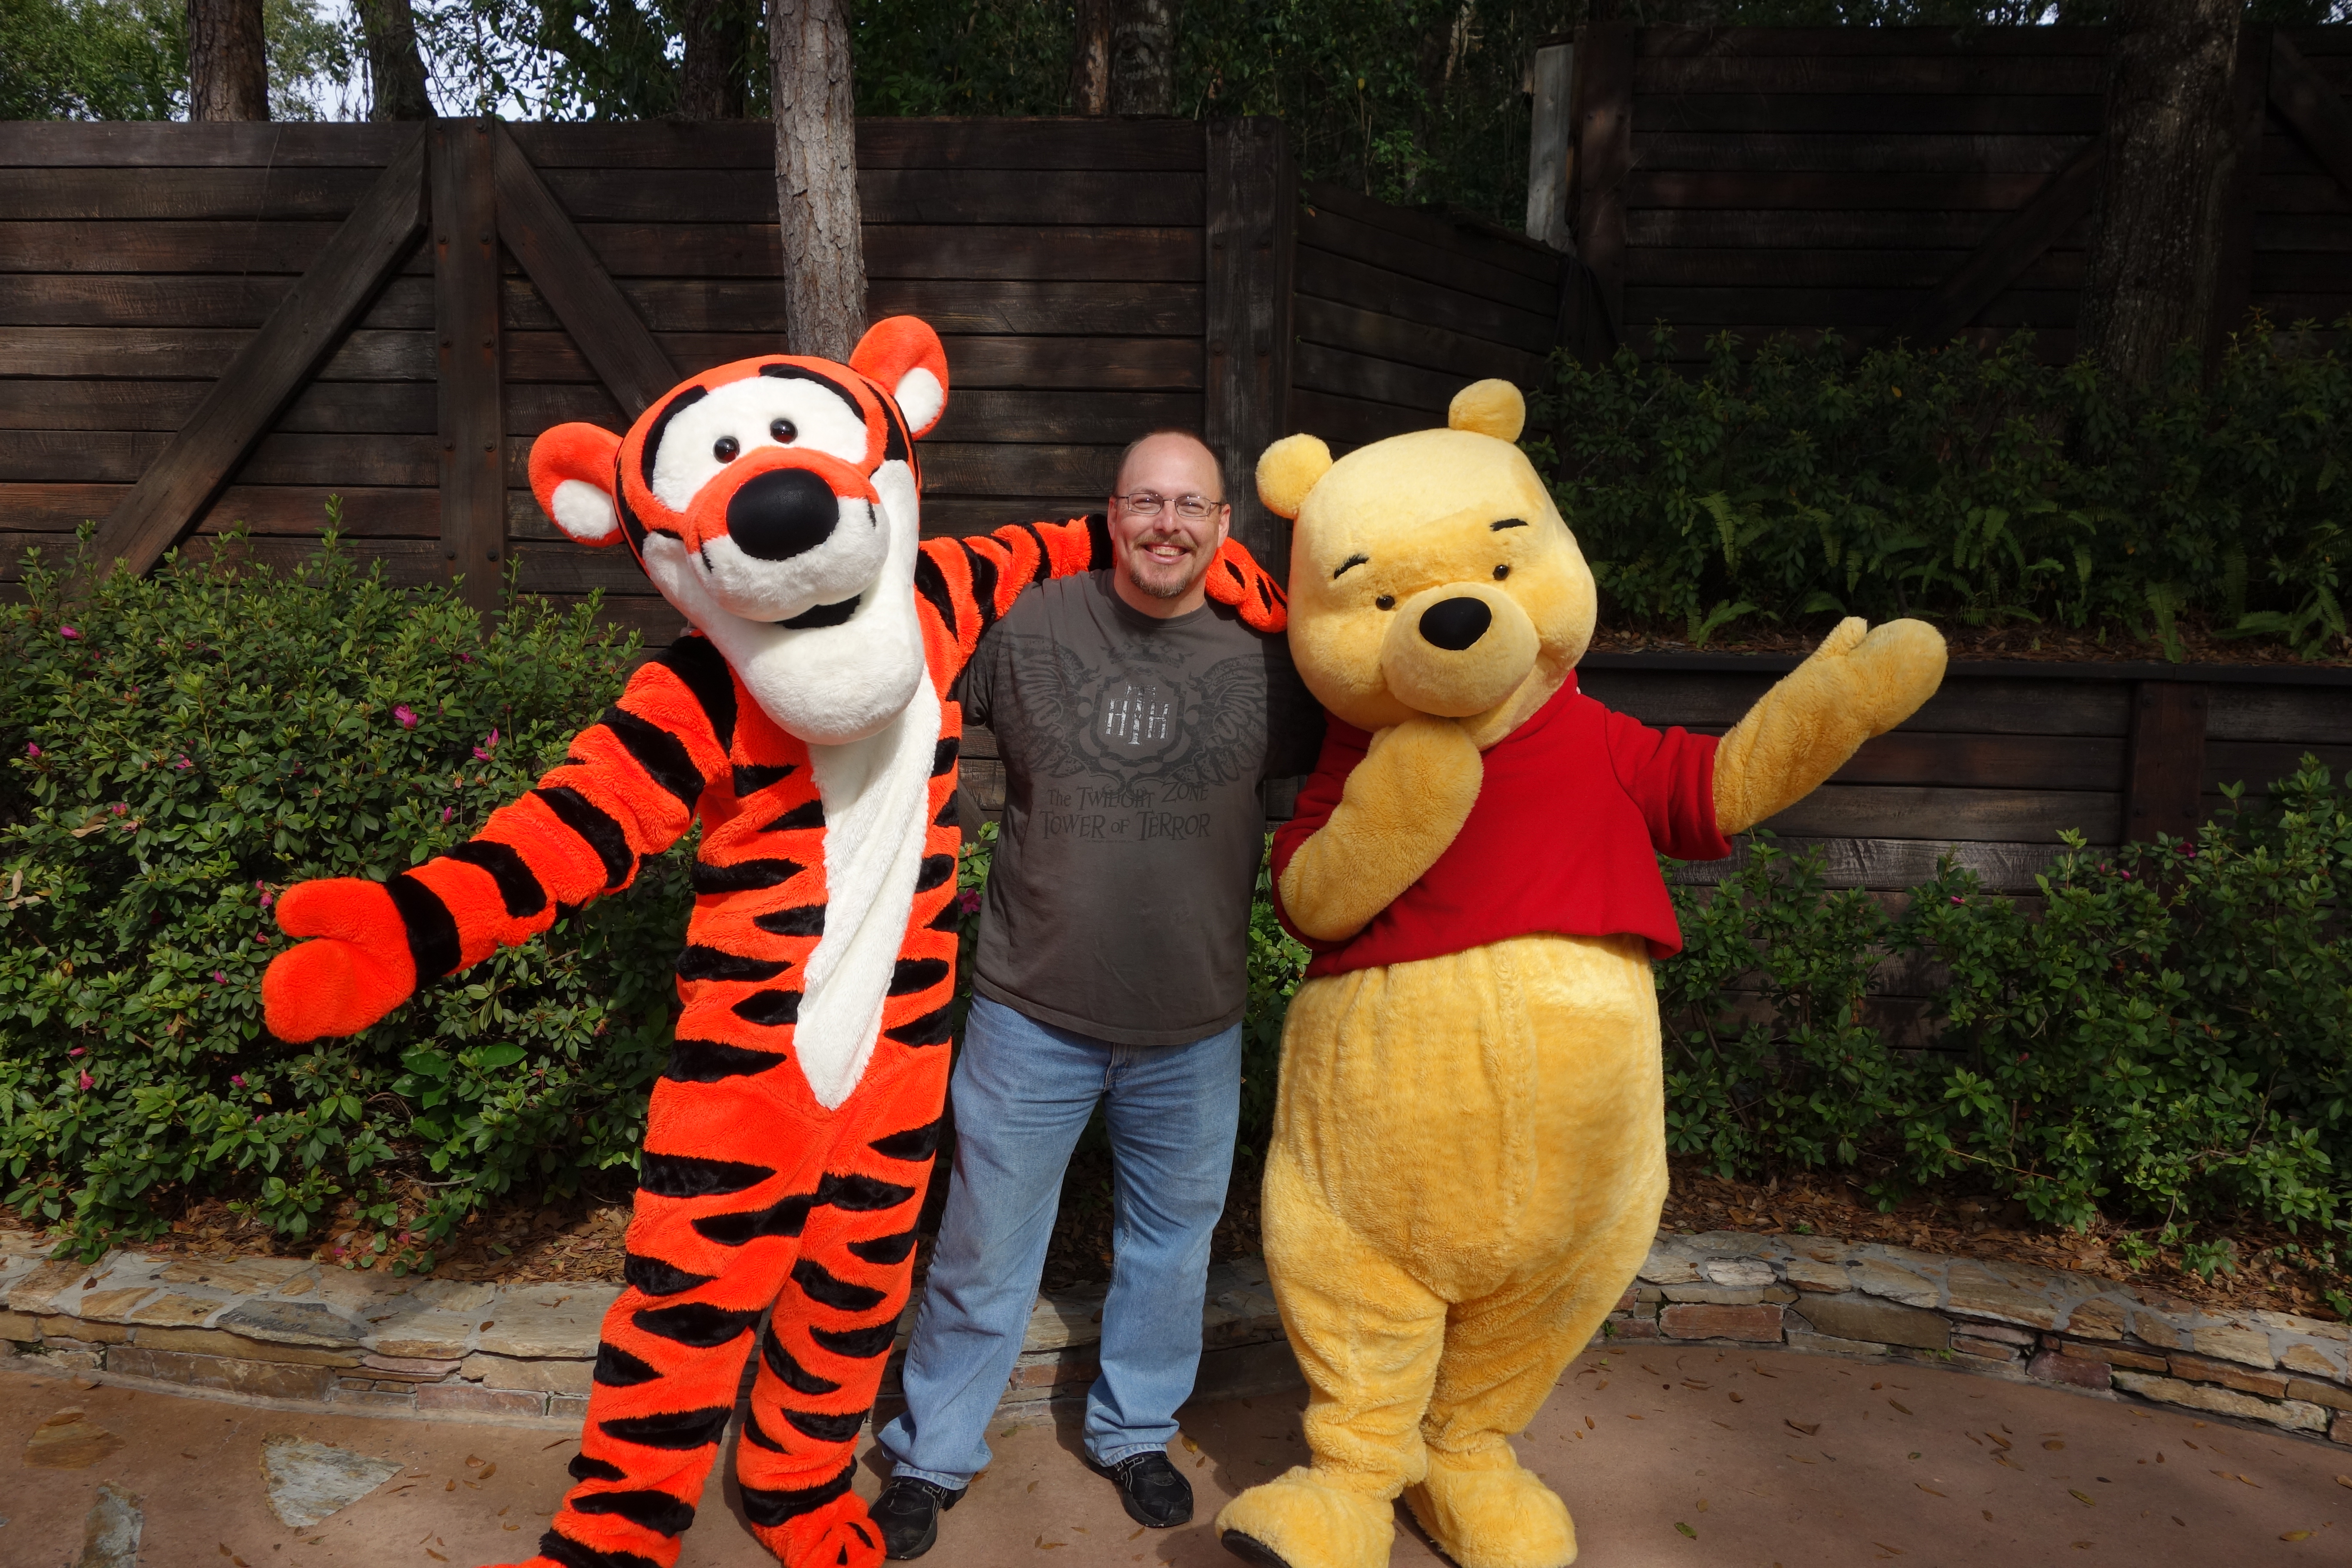 Winnie the Pooh and Tigger - Magic Kingdom Fantasyland - KennythePirate.com